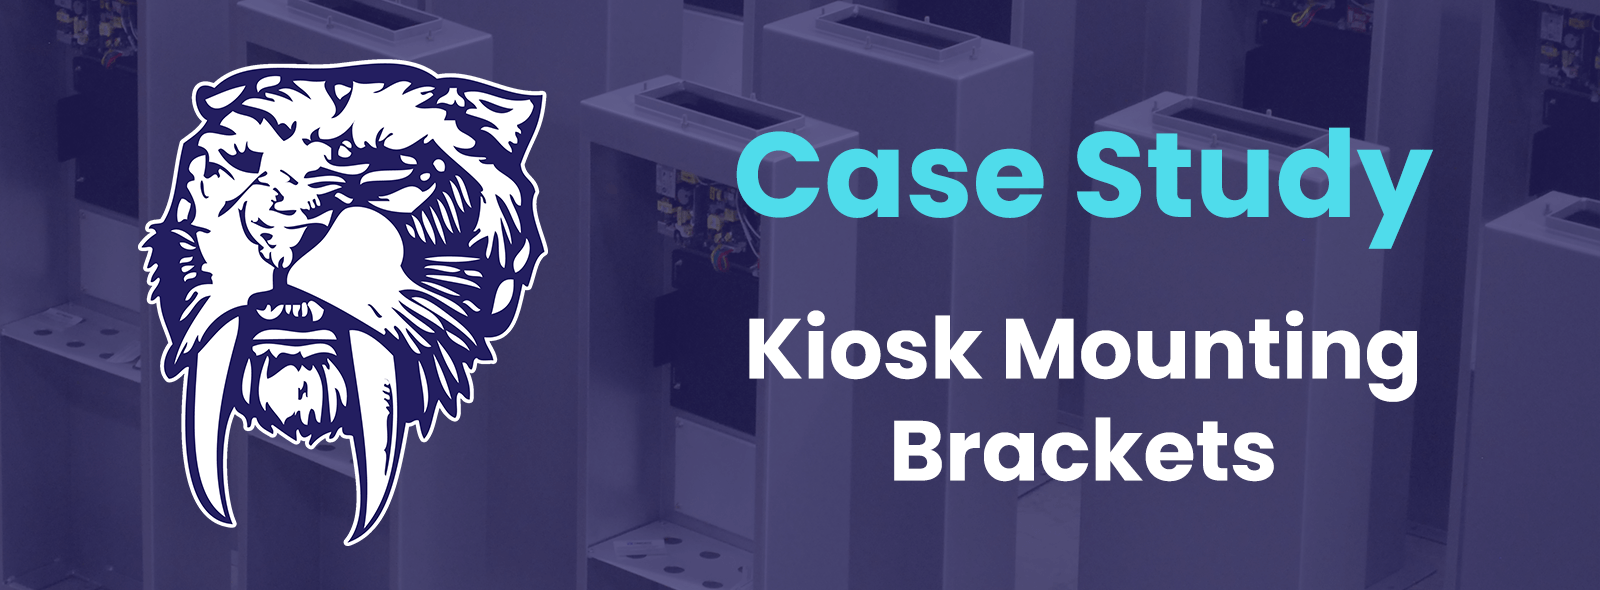 Kiosk Mounting Bracket Case Study Graphic